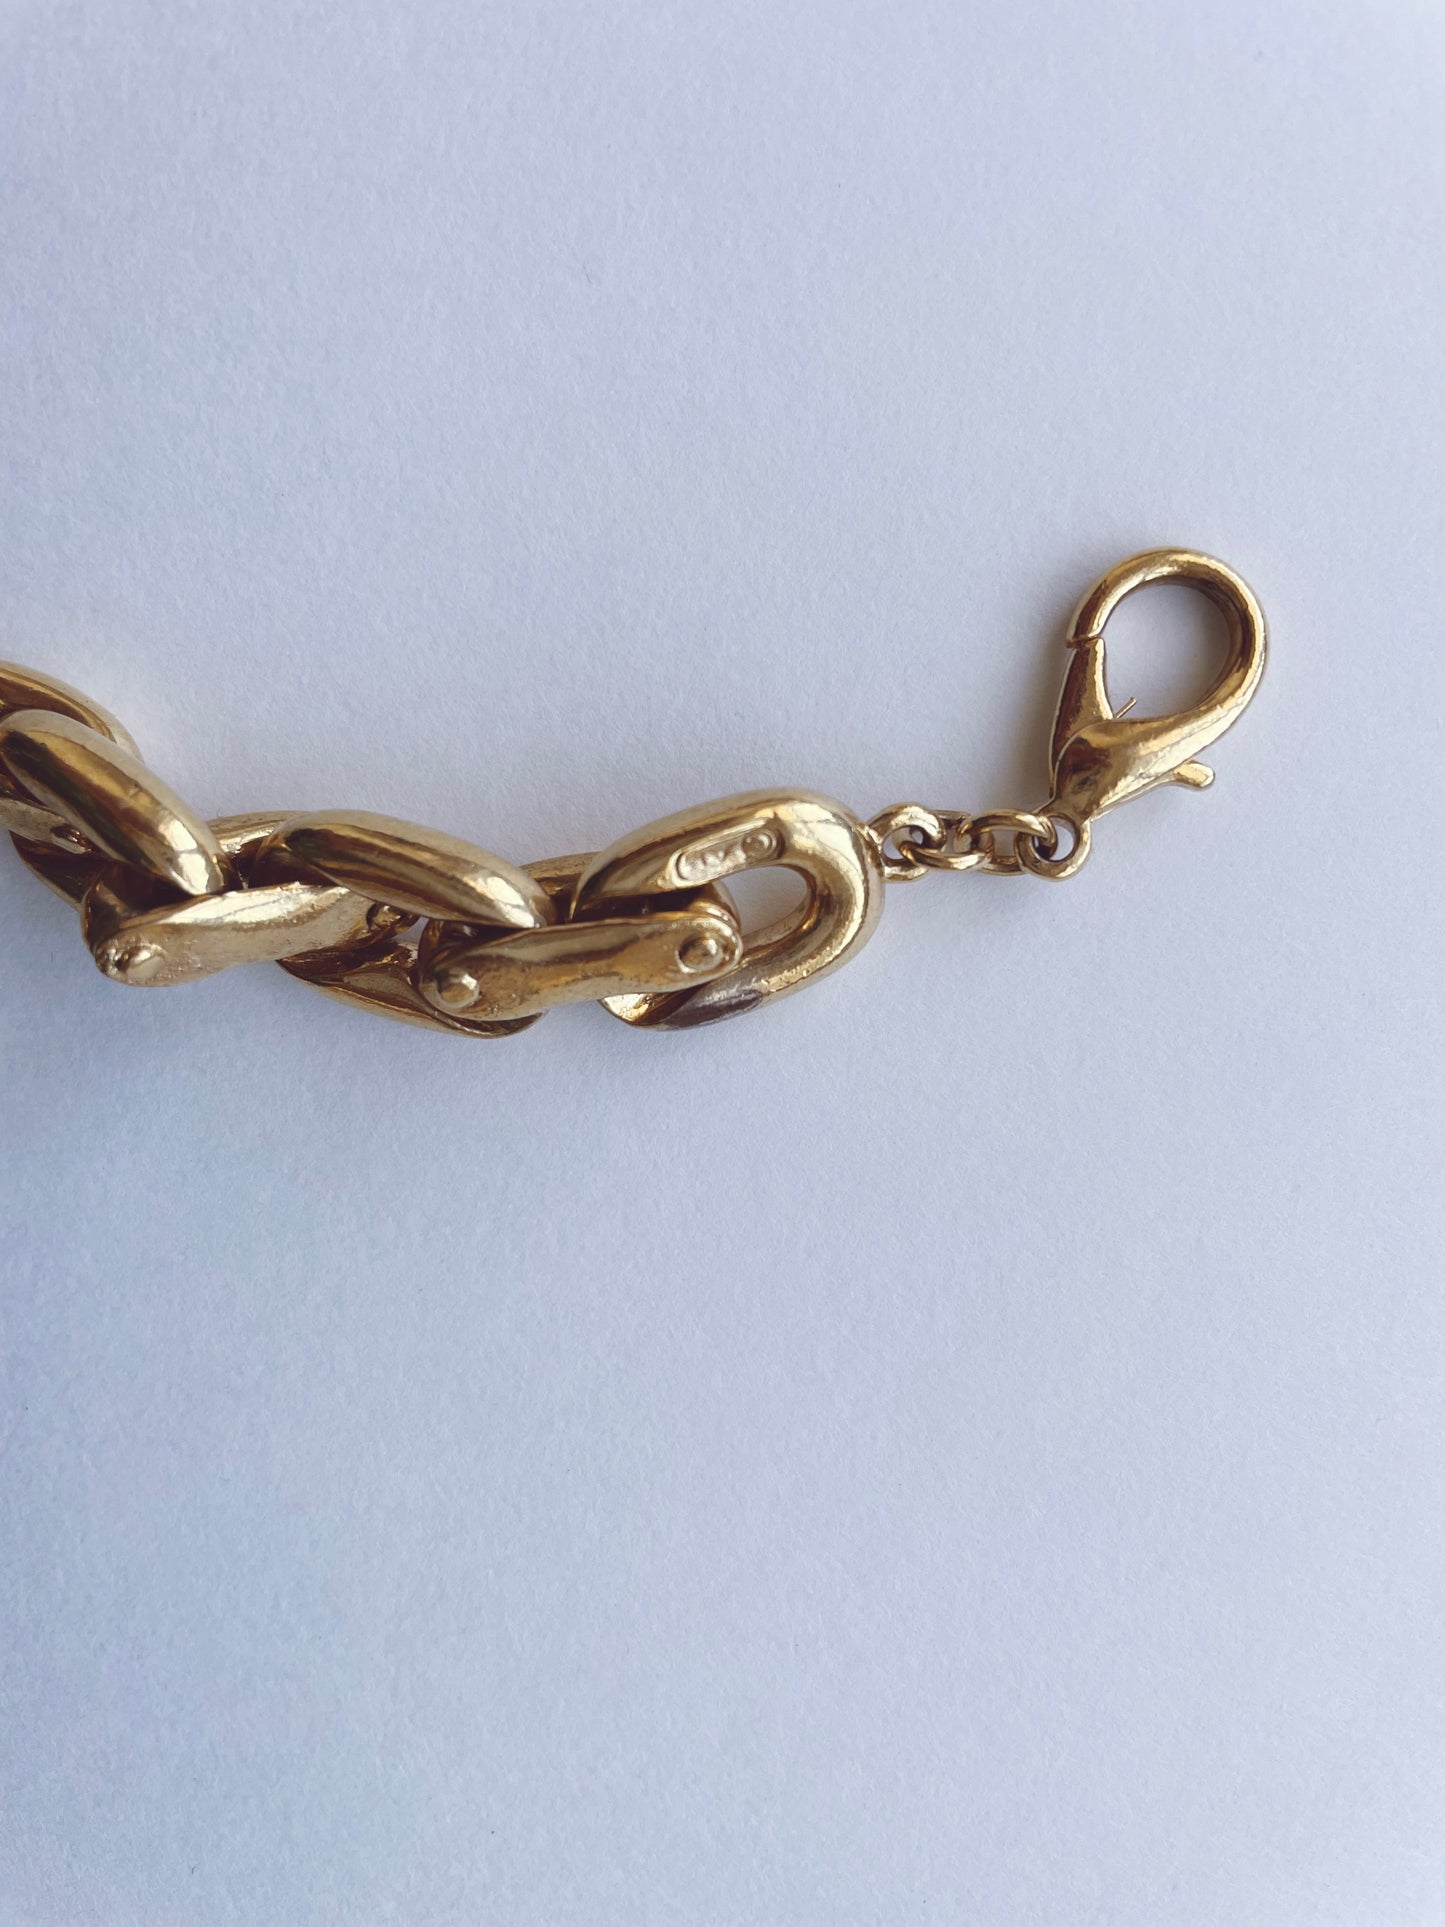 Vintage ANNE KLEIN Gold Chain Link Necklace Choker